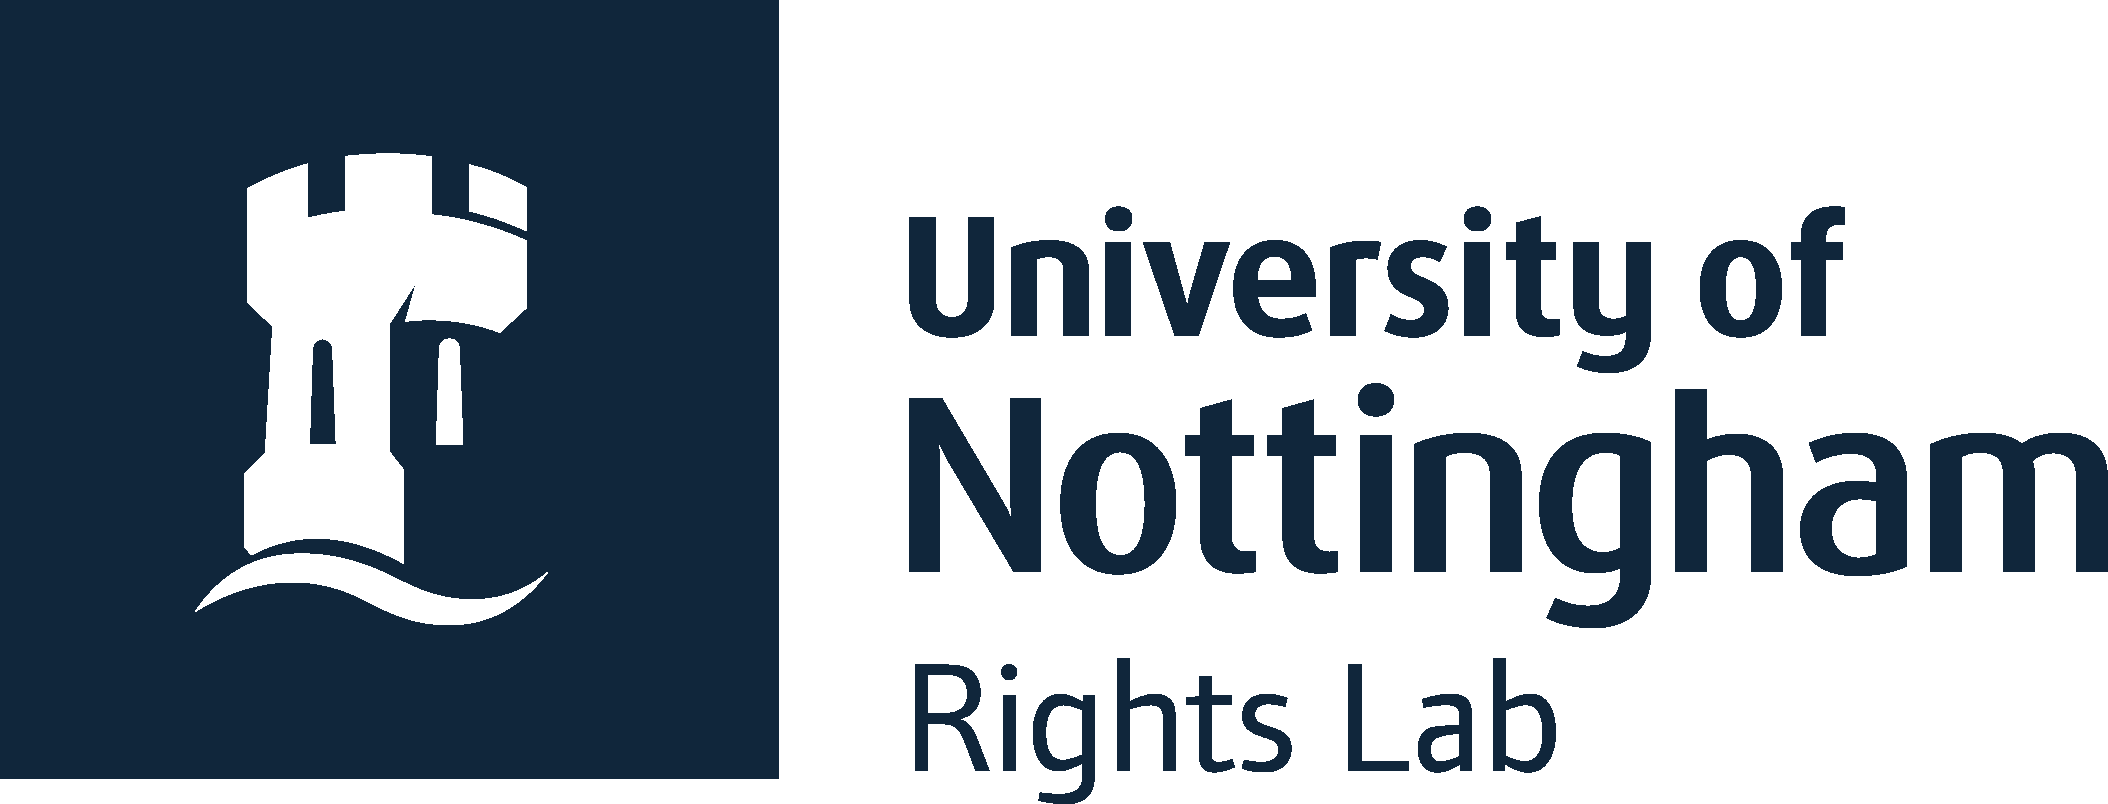 University of Nottingham Rights Lab logo